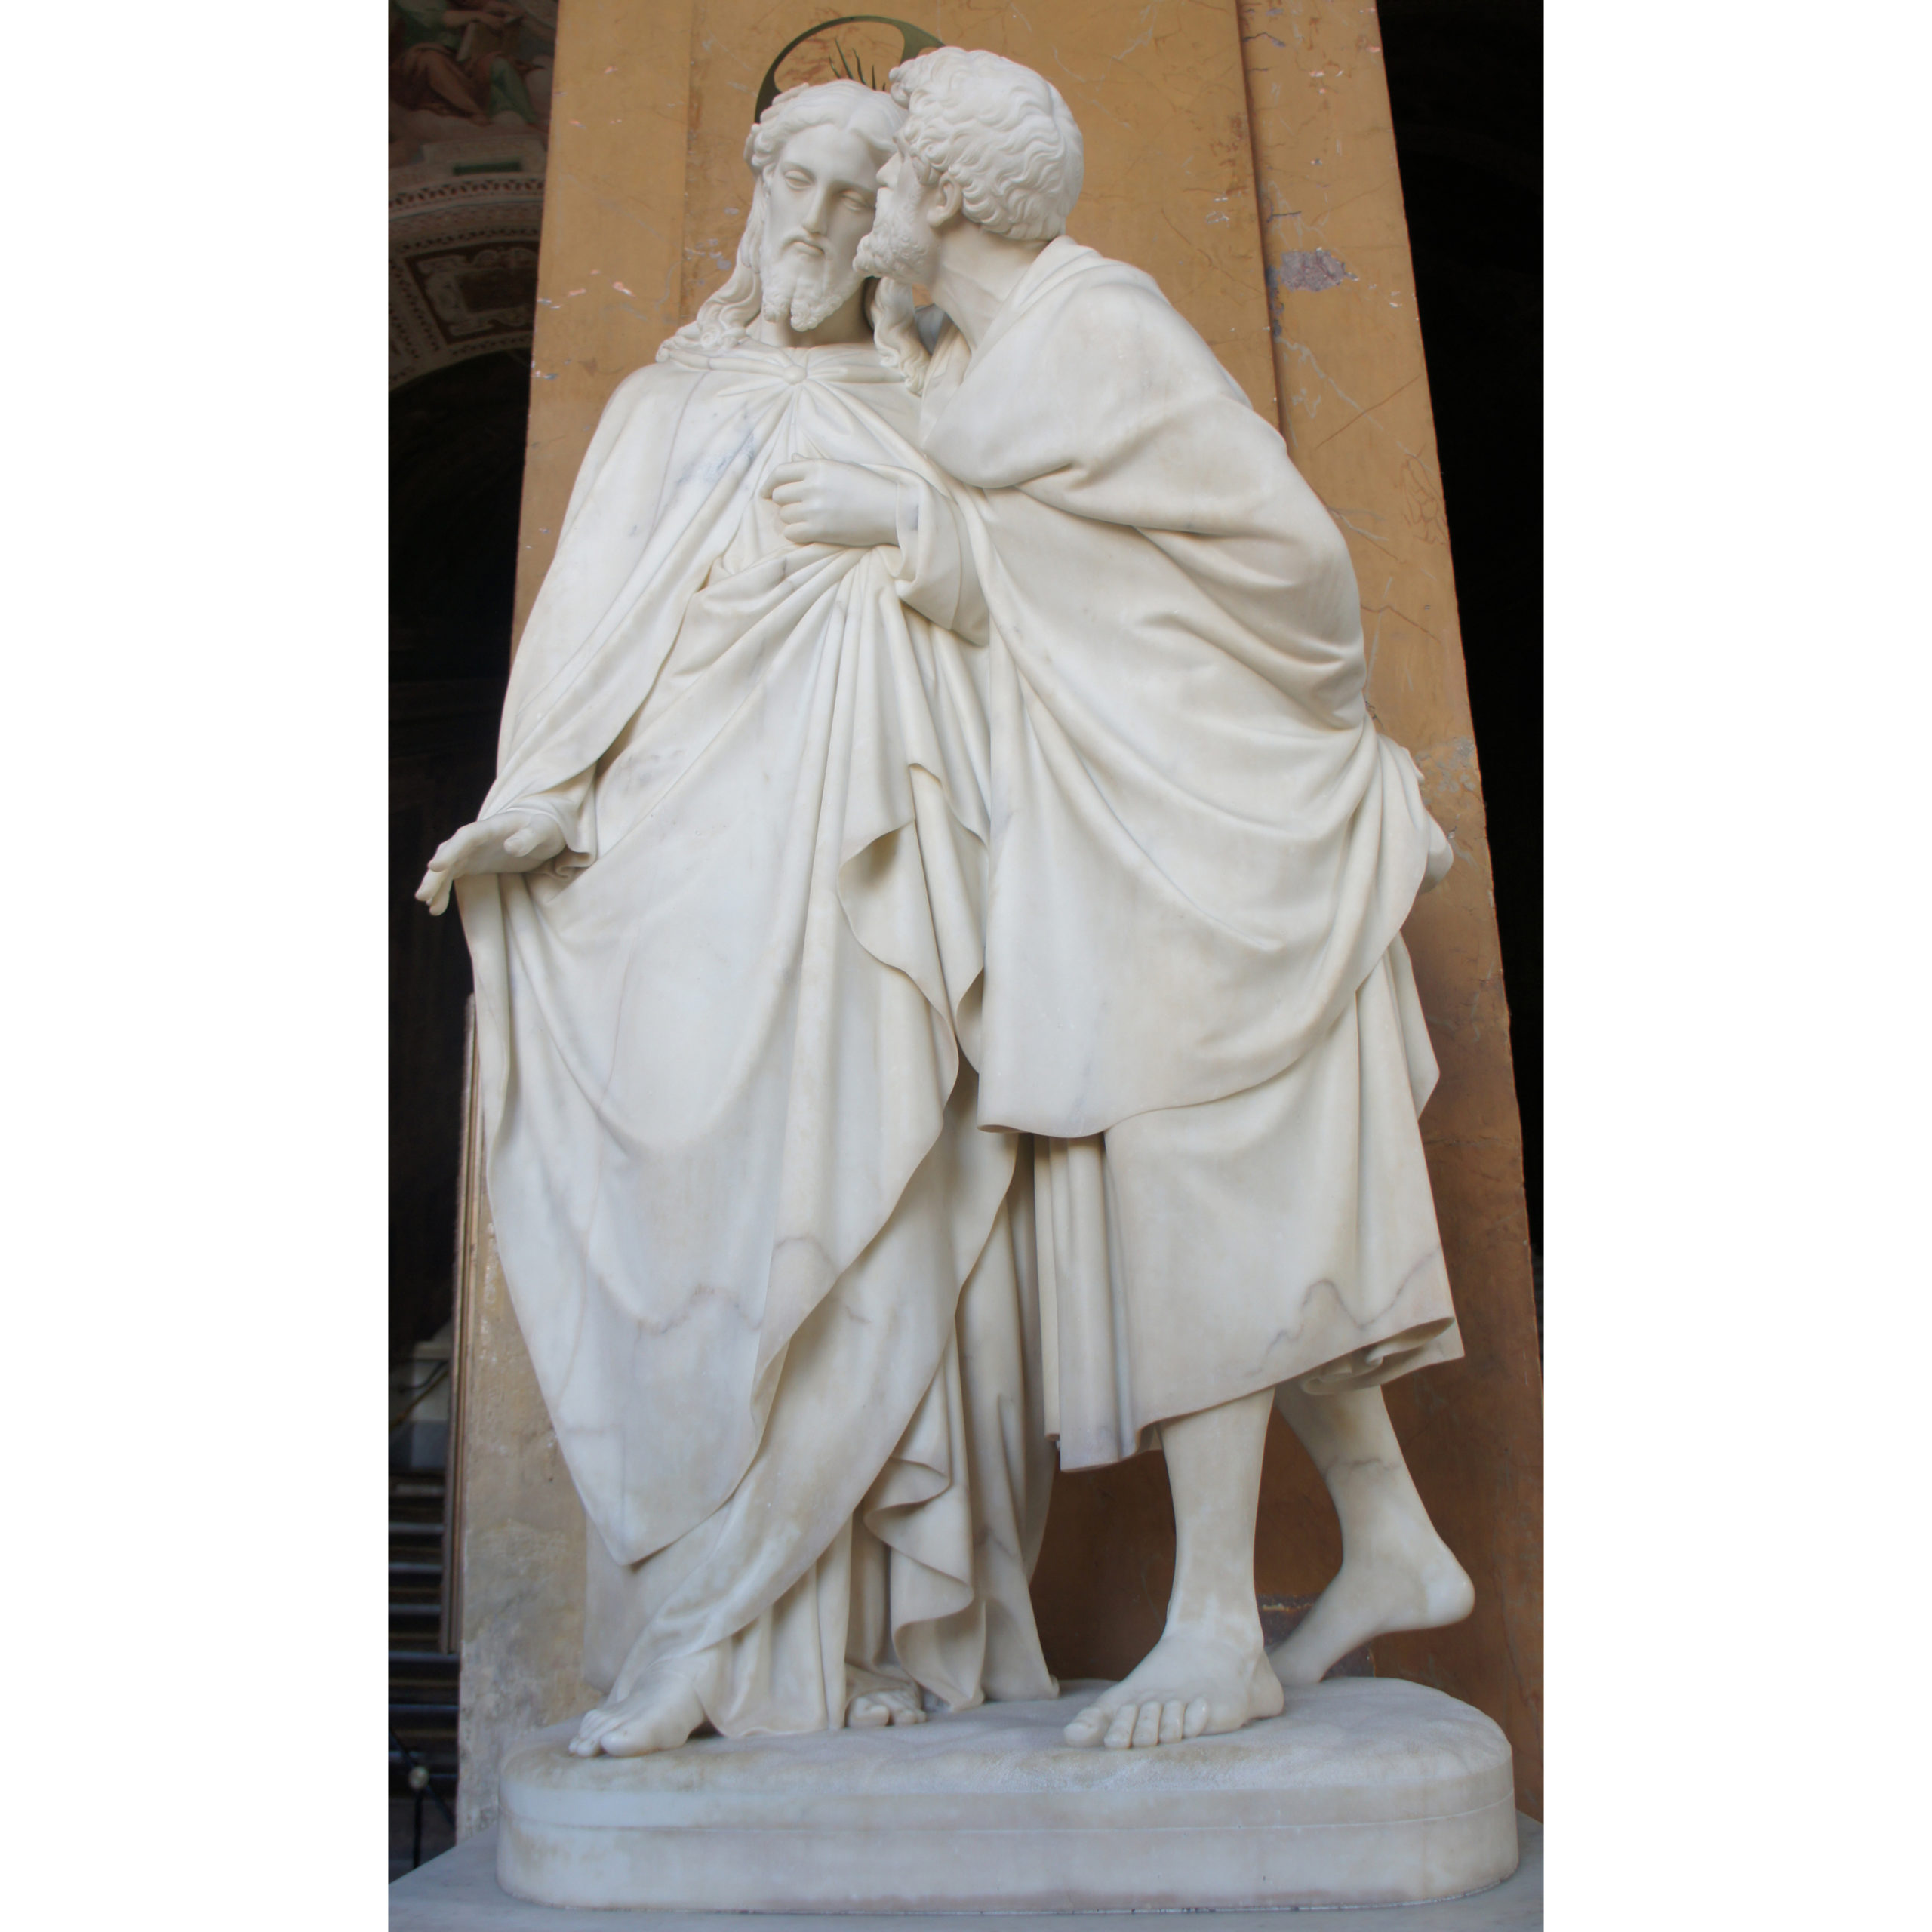 The Kiss of Judas sculpture